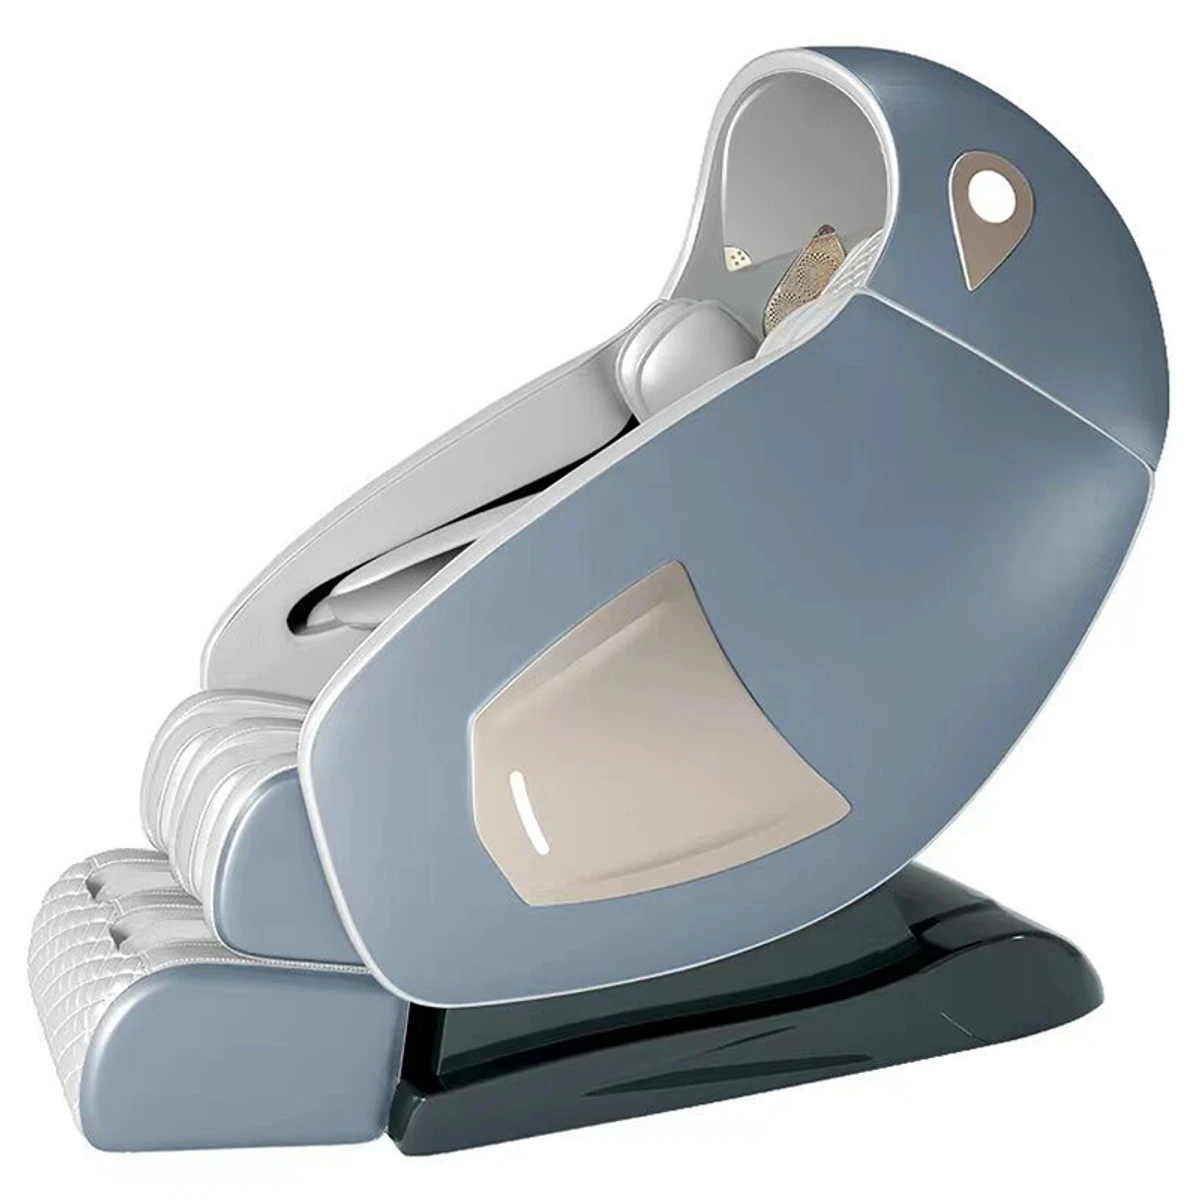 SL-229 Luxurious Body Massage Chair